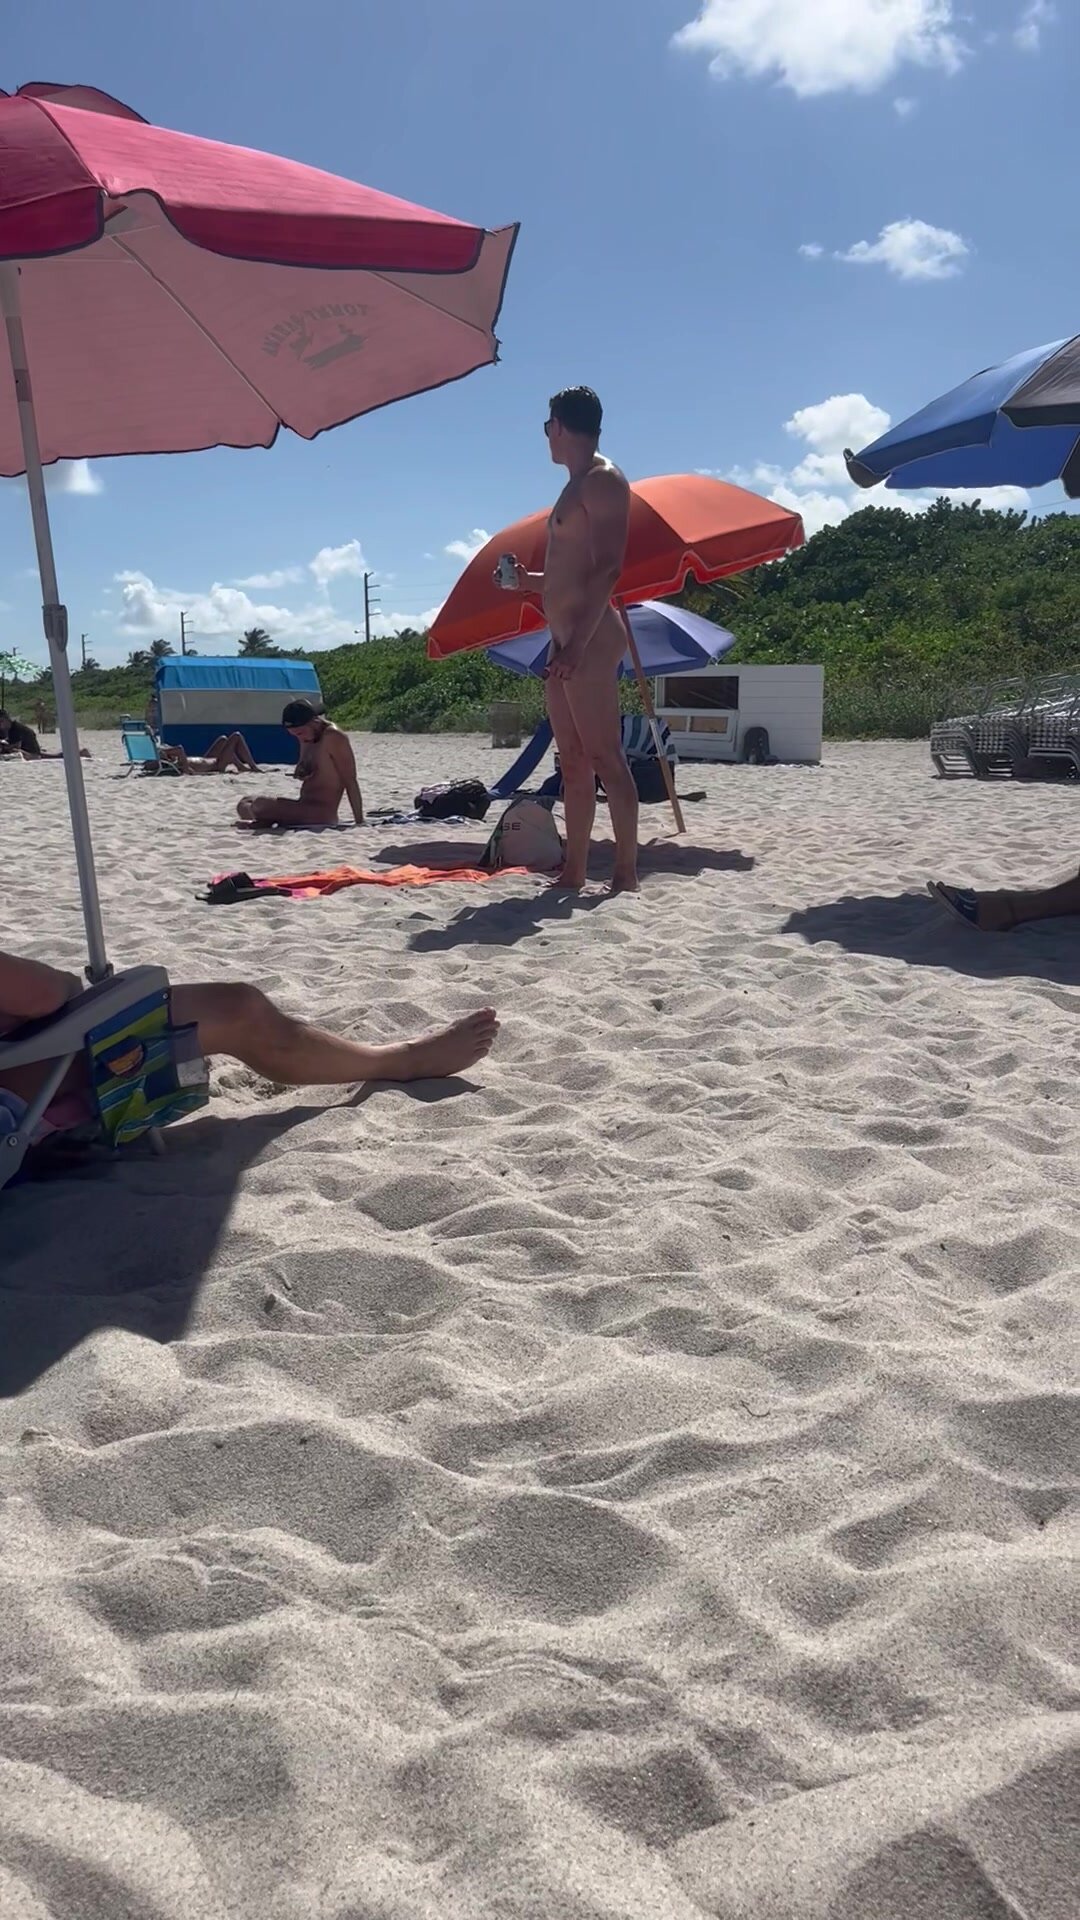 Cockshow on nude beach